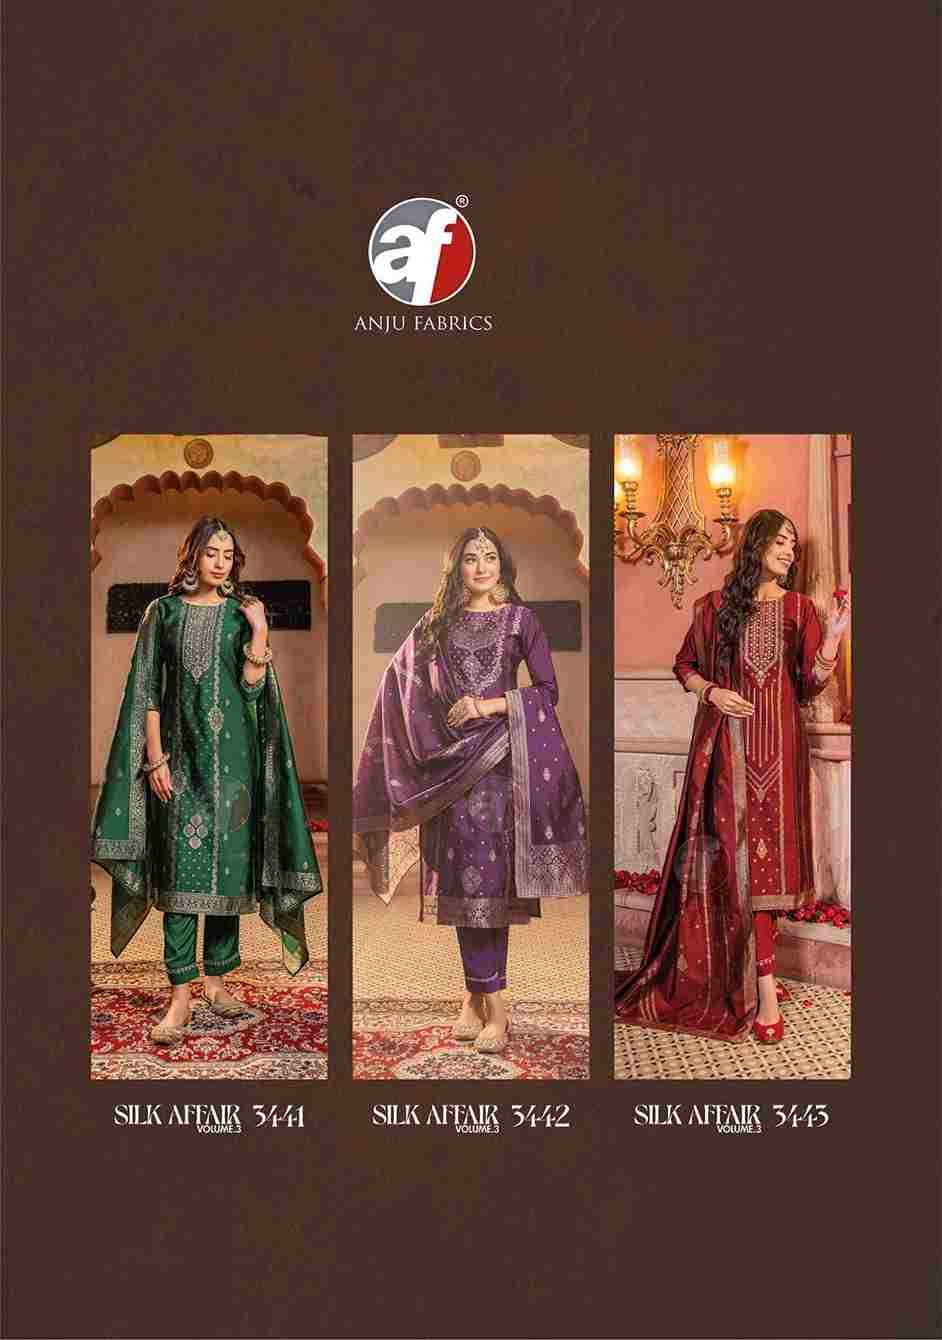 Silk Affair Vol-3 By Anju Fabrics 3441 To 3446 Series Beautiful Festive Suits Colorful Stylish Fancy Casual Wear & Ethnic Wear Jacquard Banarasi Silk Dresses At Wholesale Price